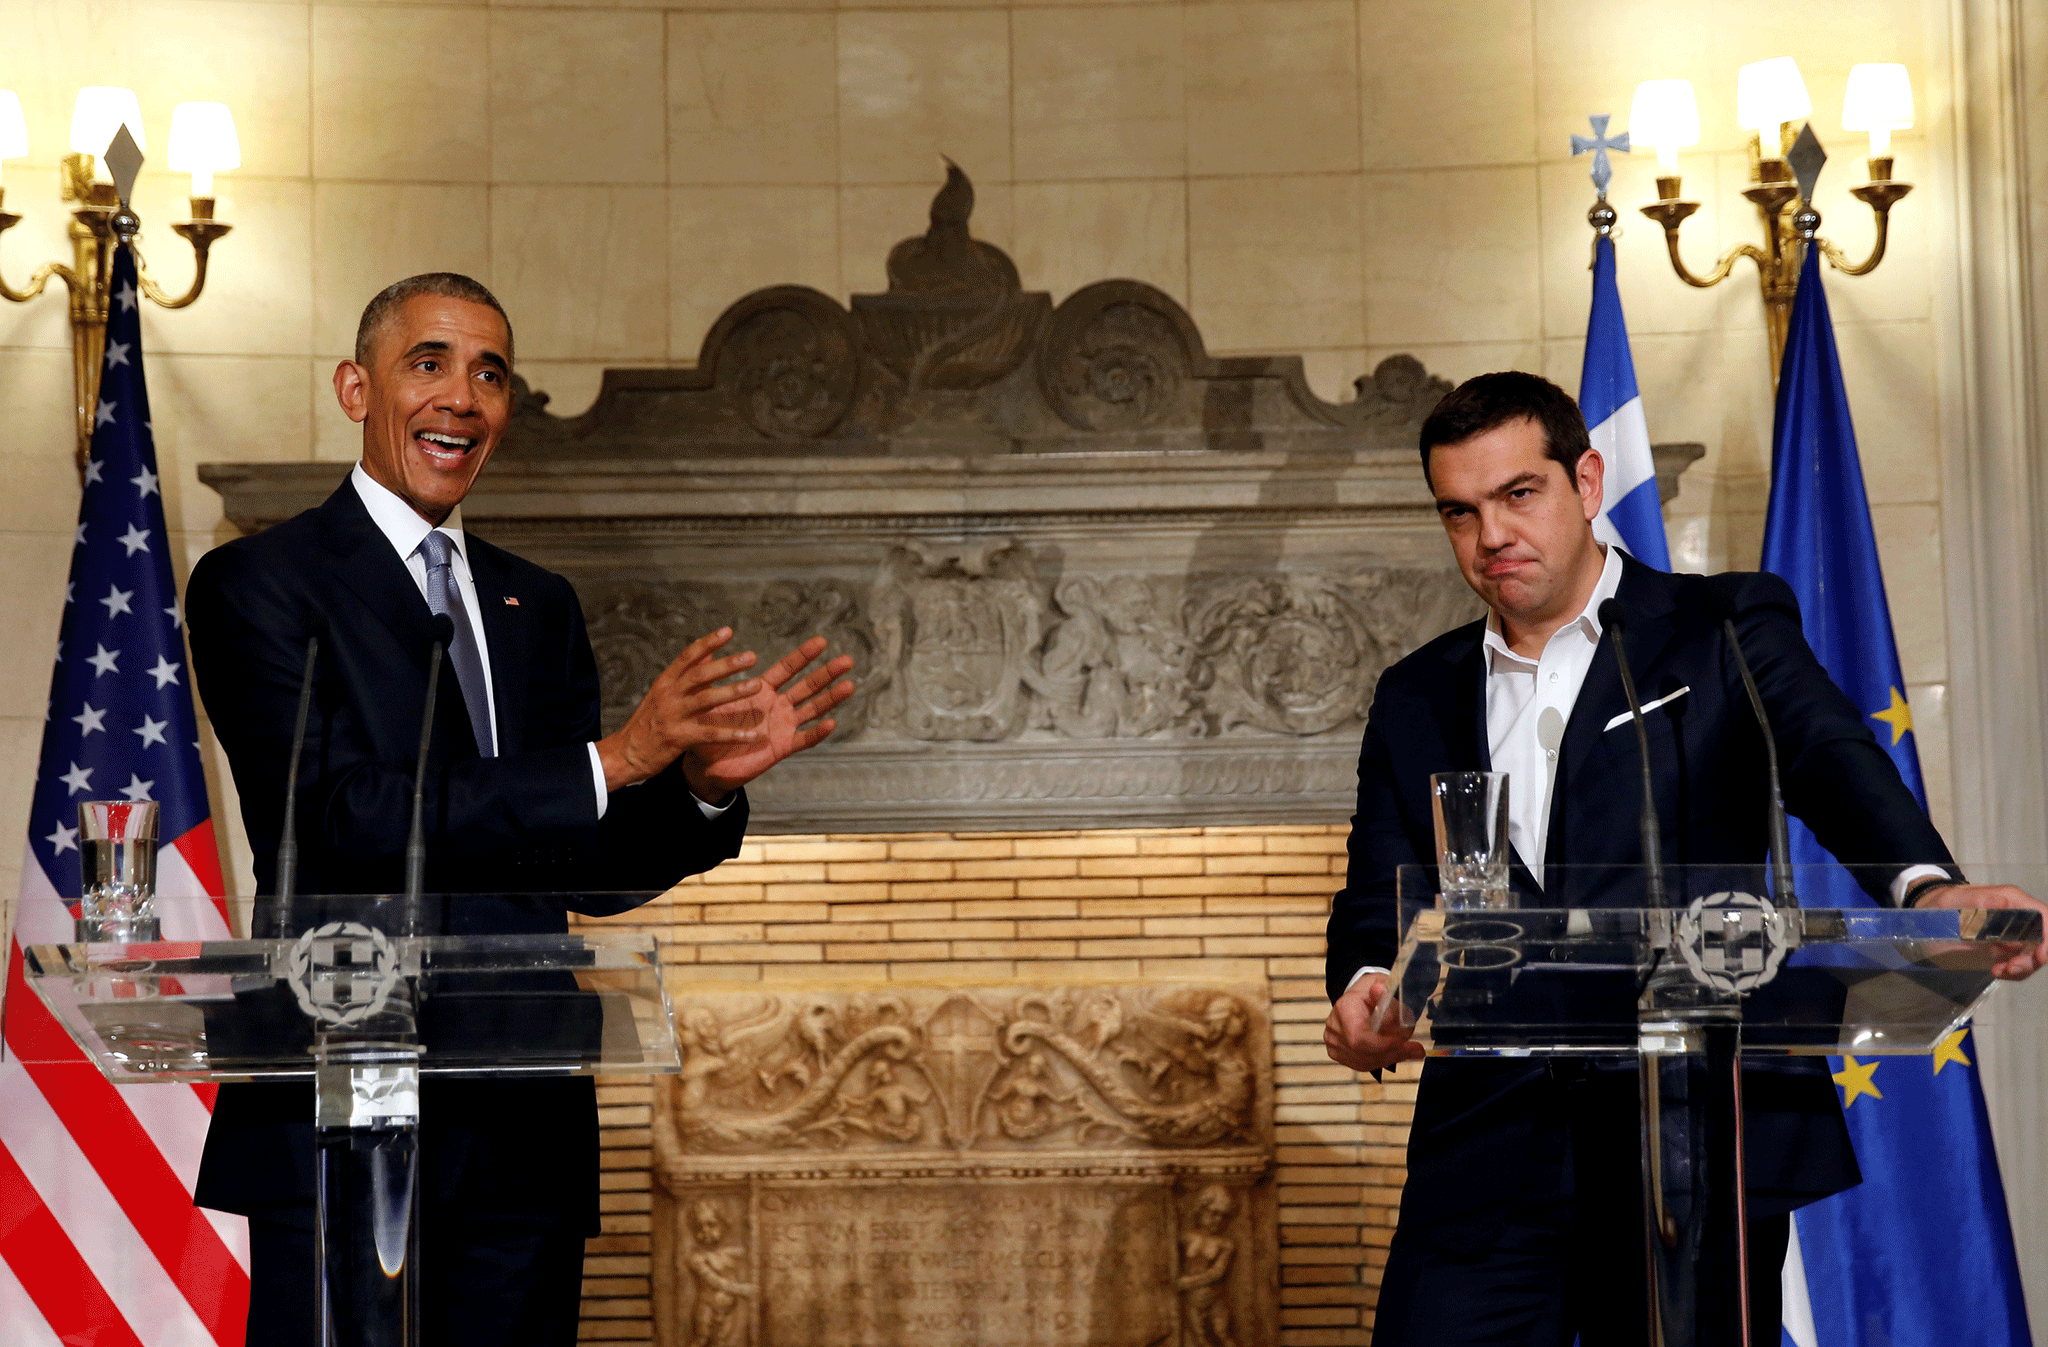 Barack Obama backs IMF calls for Greece debt relief